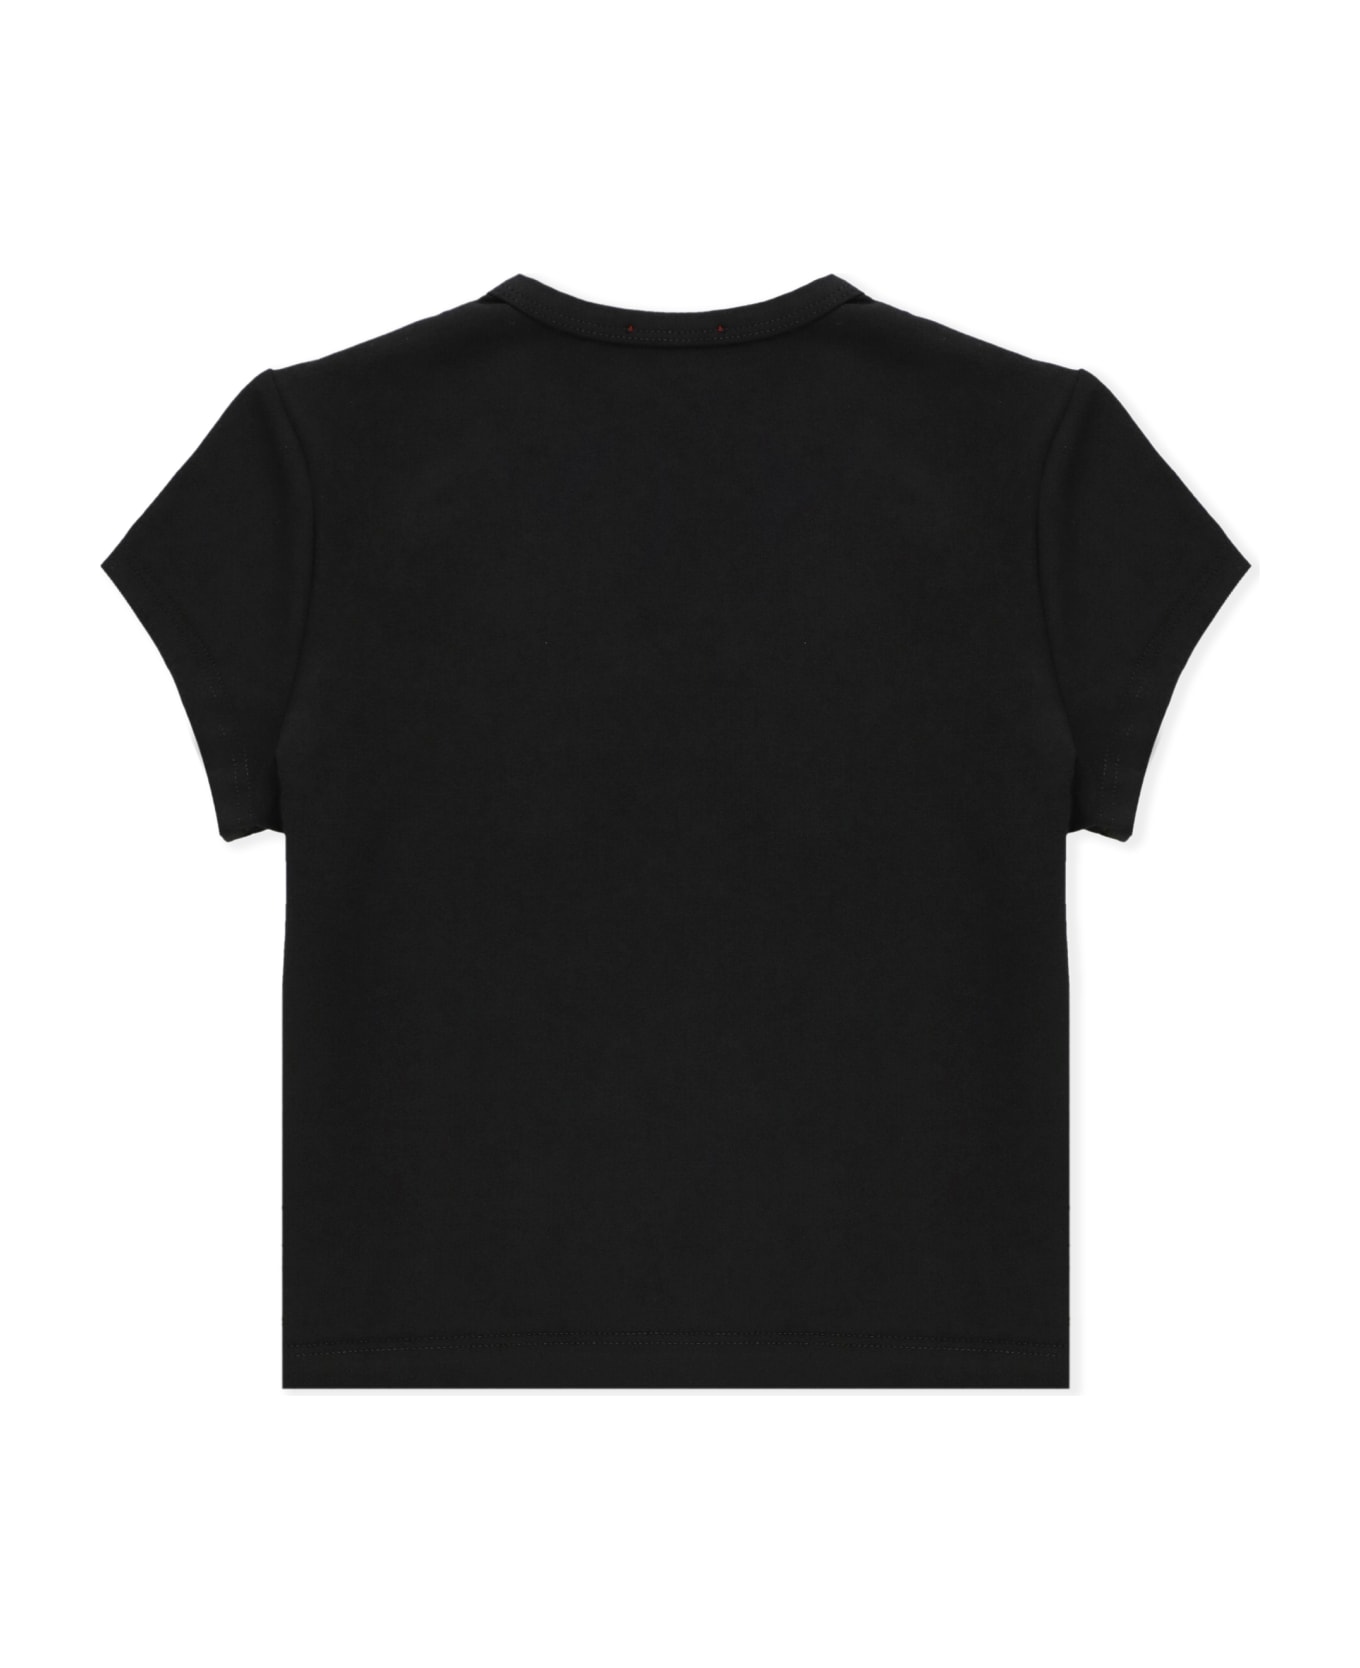 Diesel Tangie T-shirt - Black